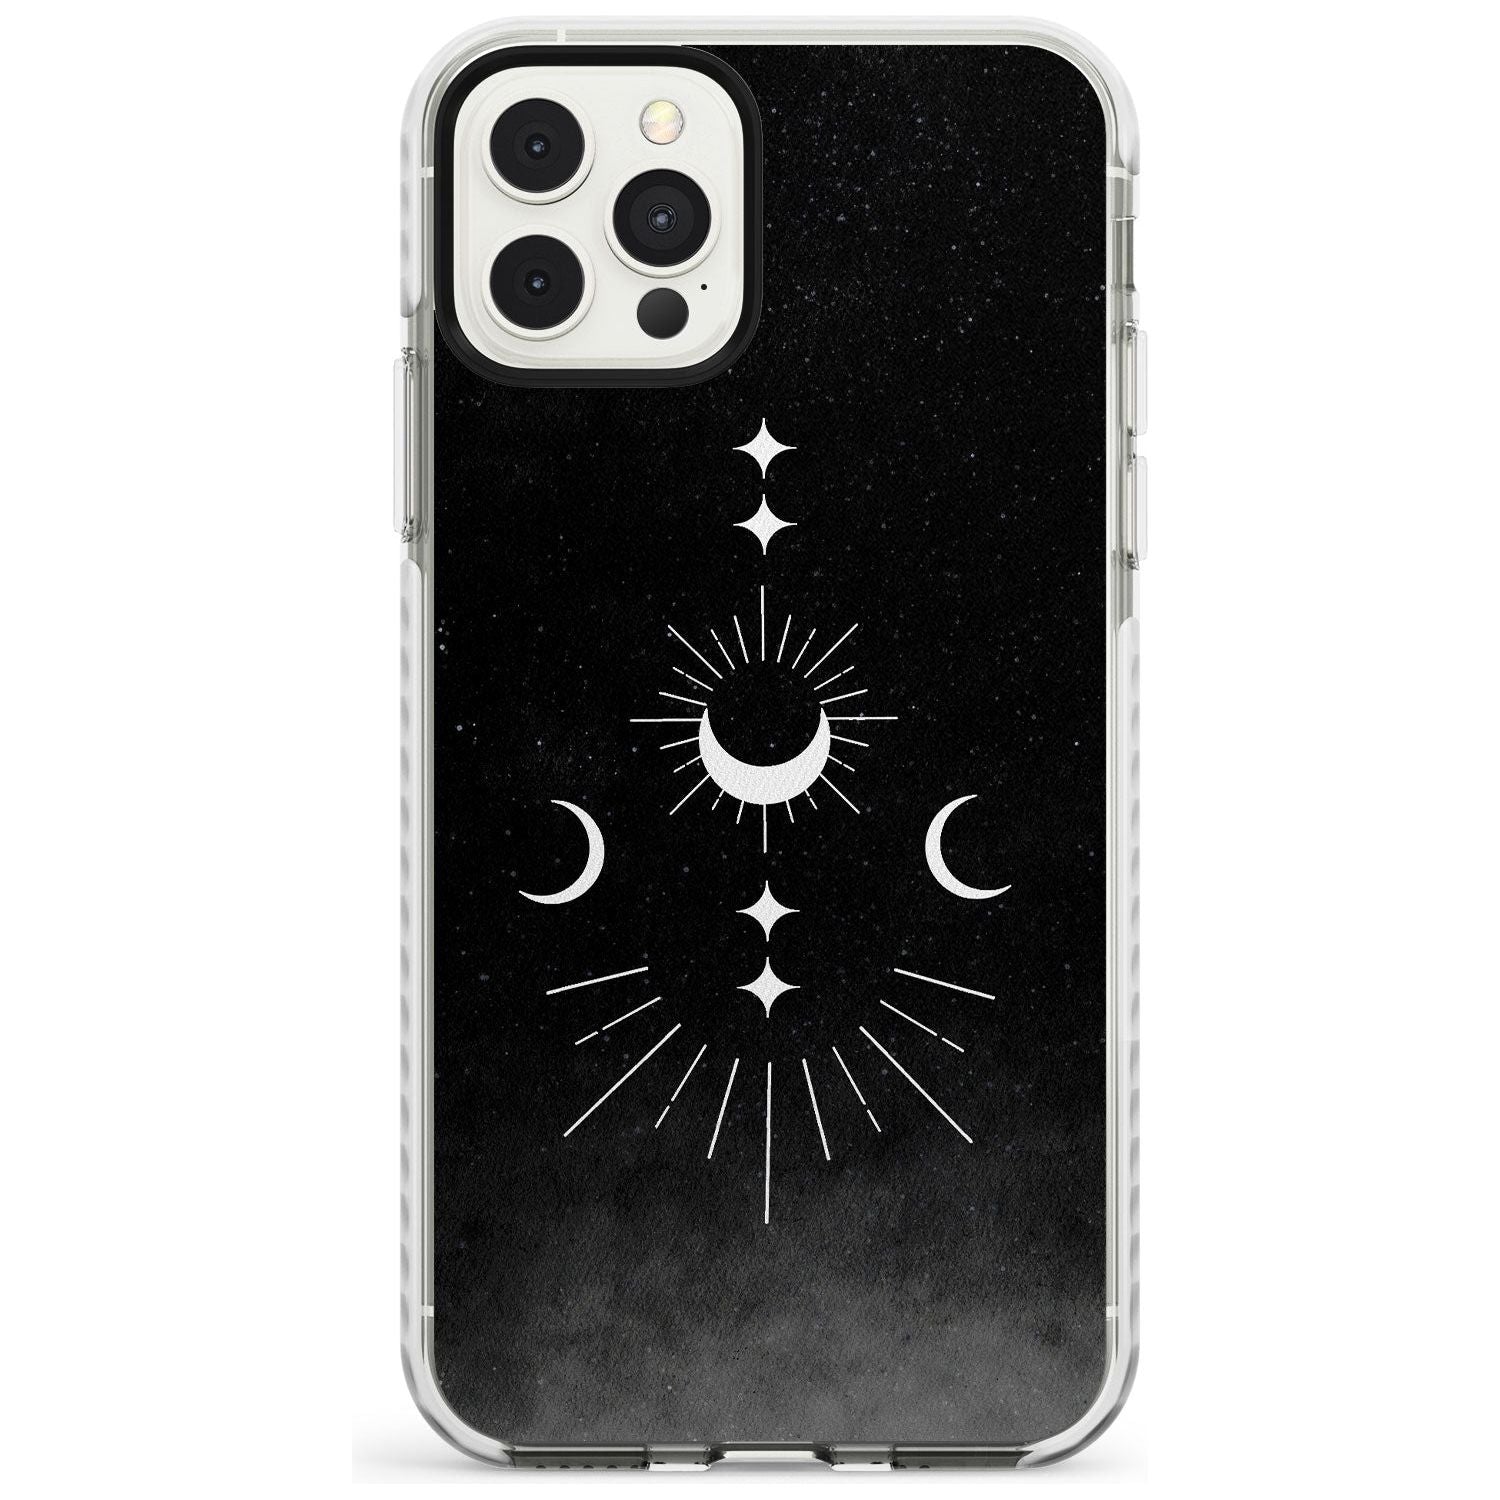 Small Moon Mandala Slim TPU Phone Case for iPhone 11 Pro Max